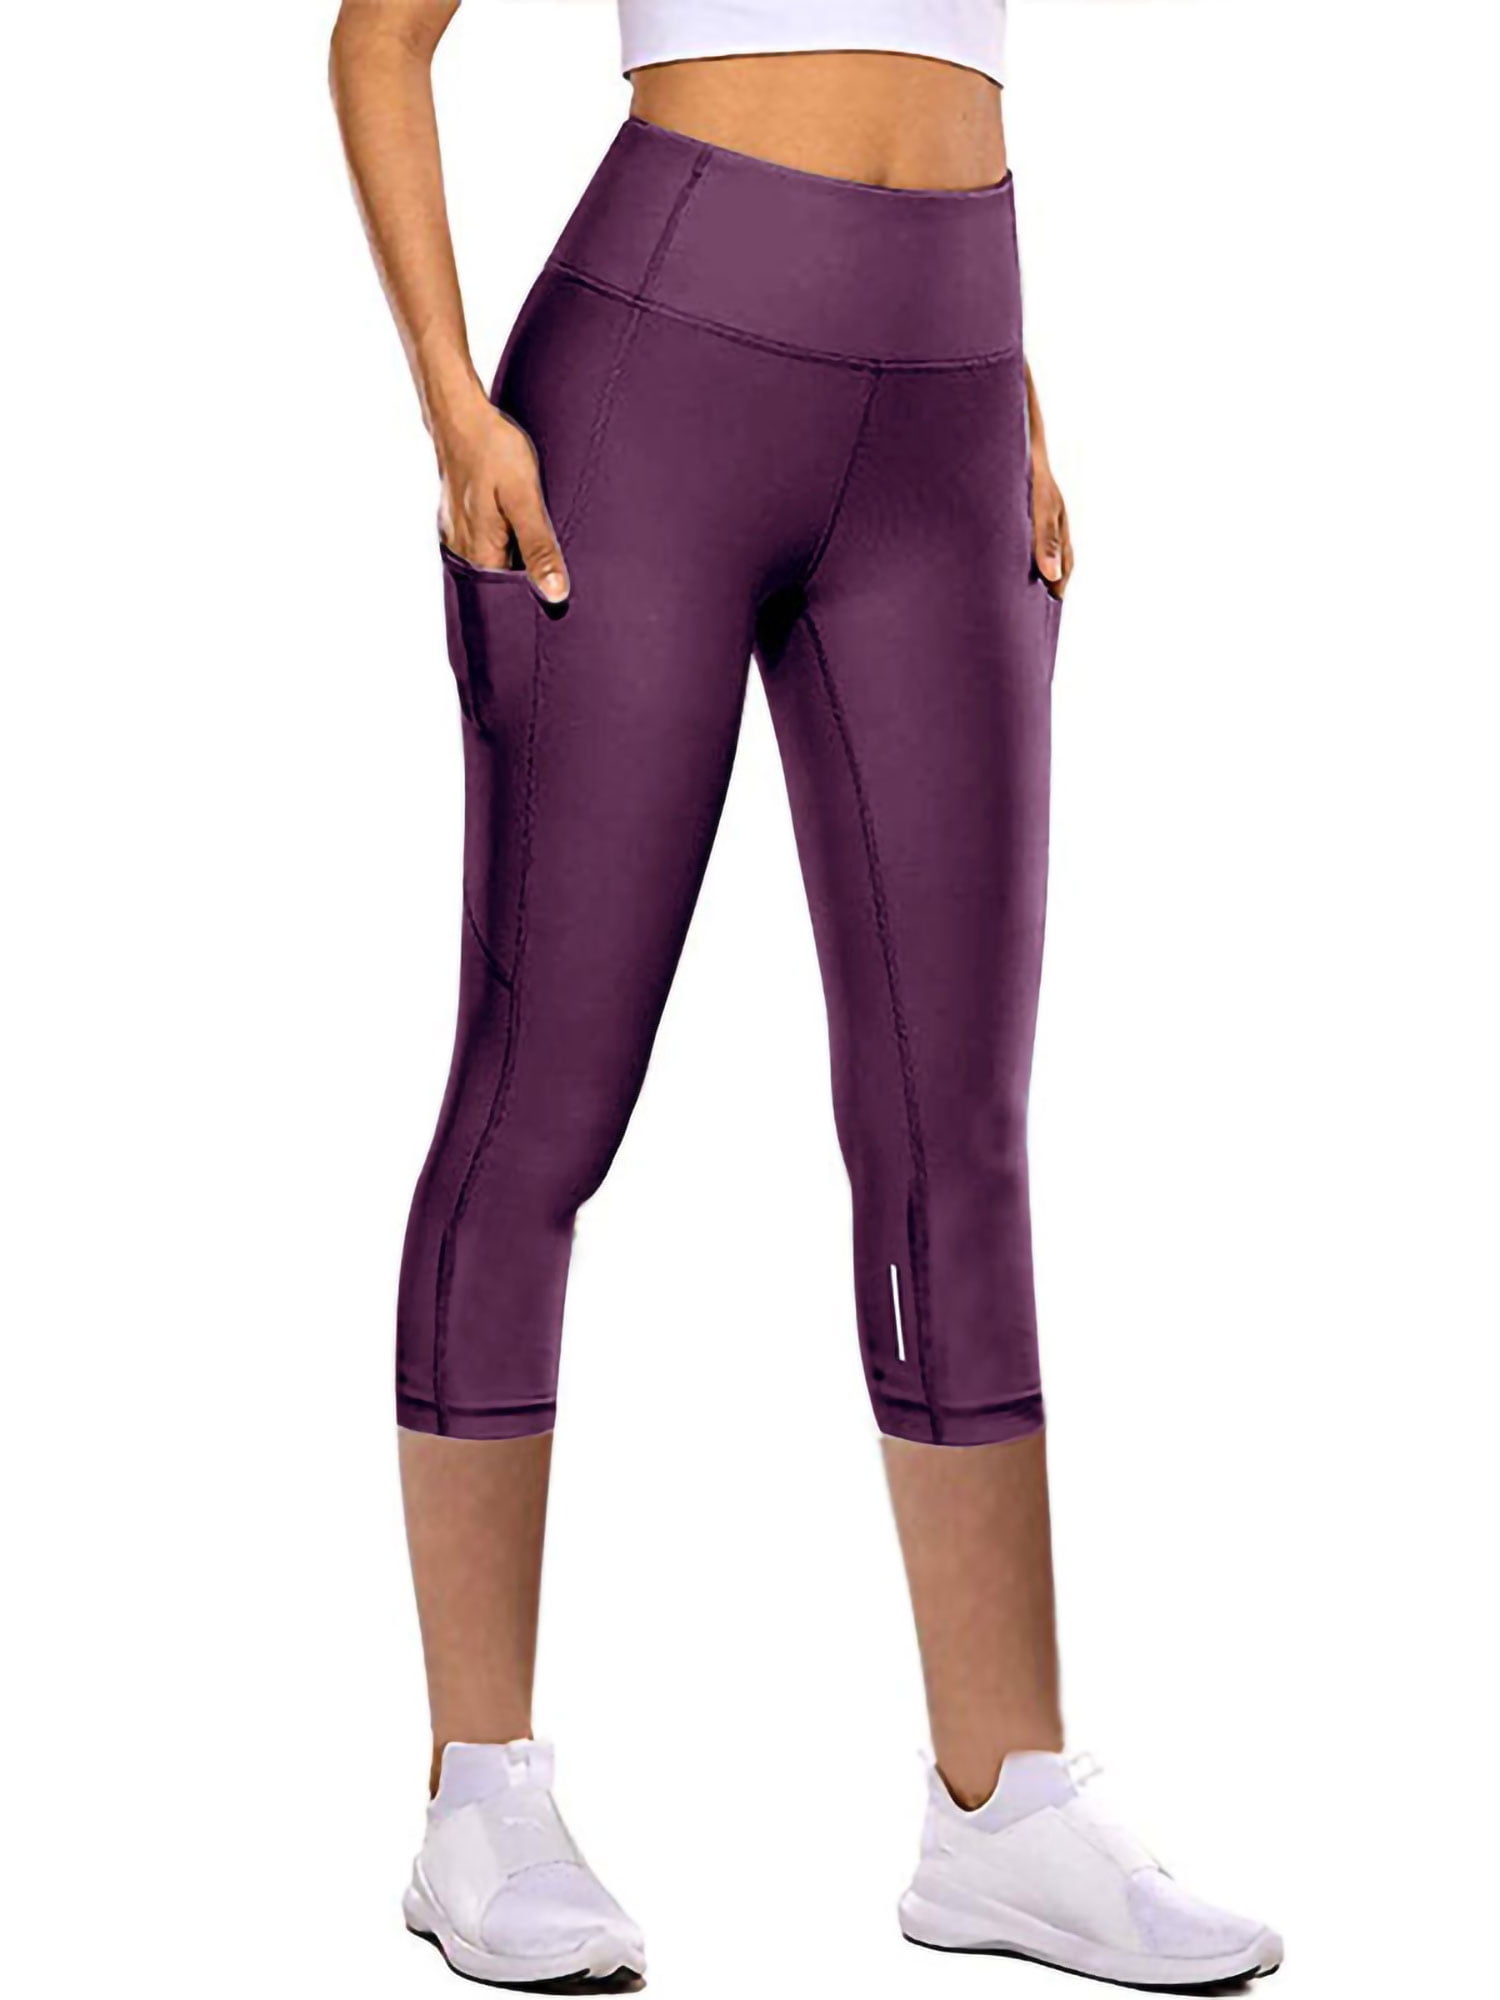 Niuer Capri 3/4 Yoga Pants for Women Sides Pockets High Waist Workout Yoga  Leggings Slim Fit Activewear 